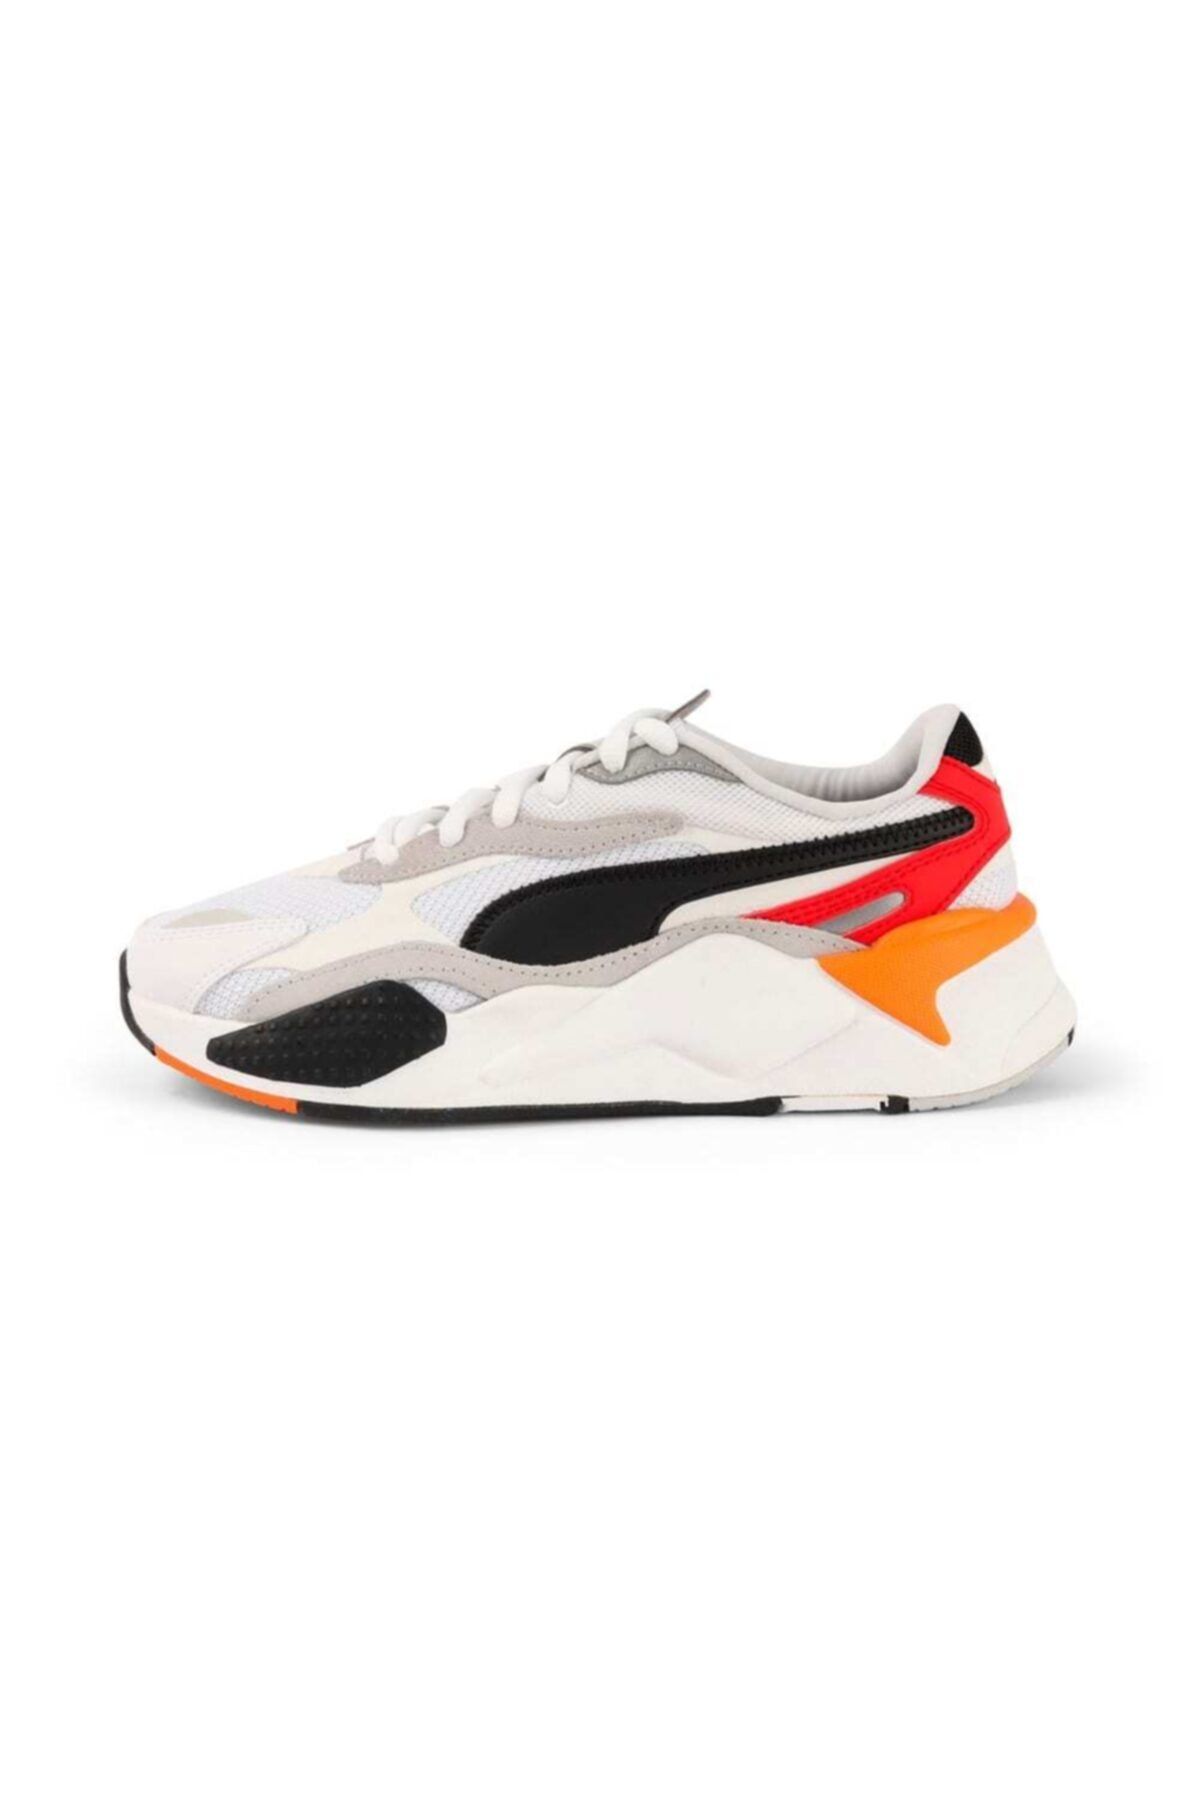 Puma Kadın  Mesh  Pop Spor Ayakkabı Sneaker Rs-x³ 37211701